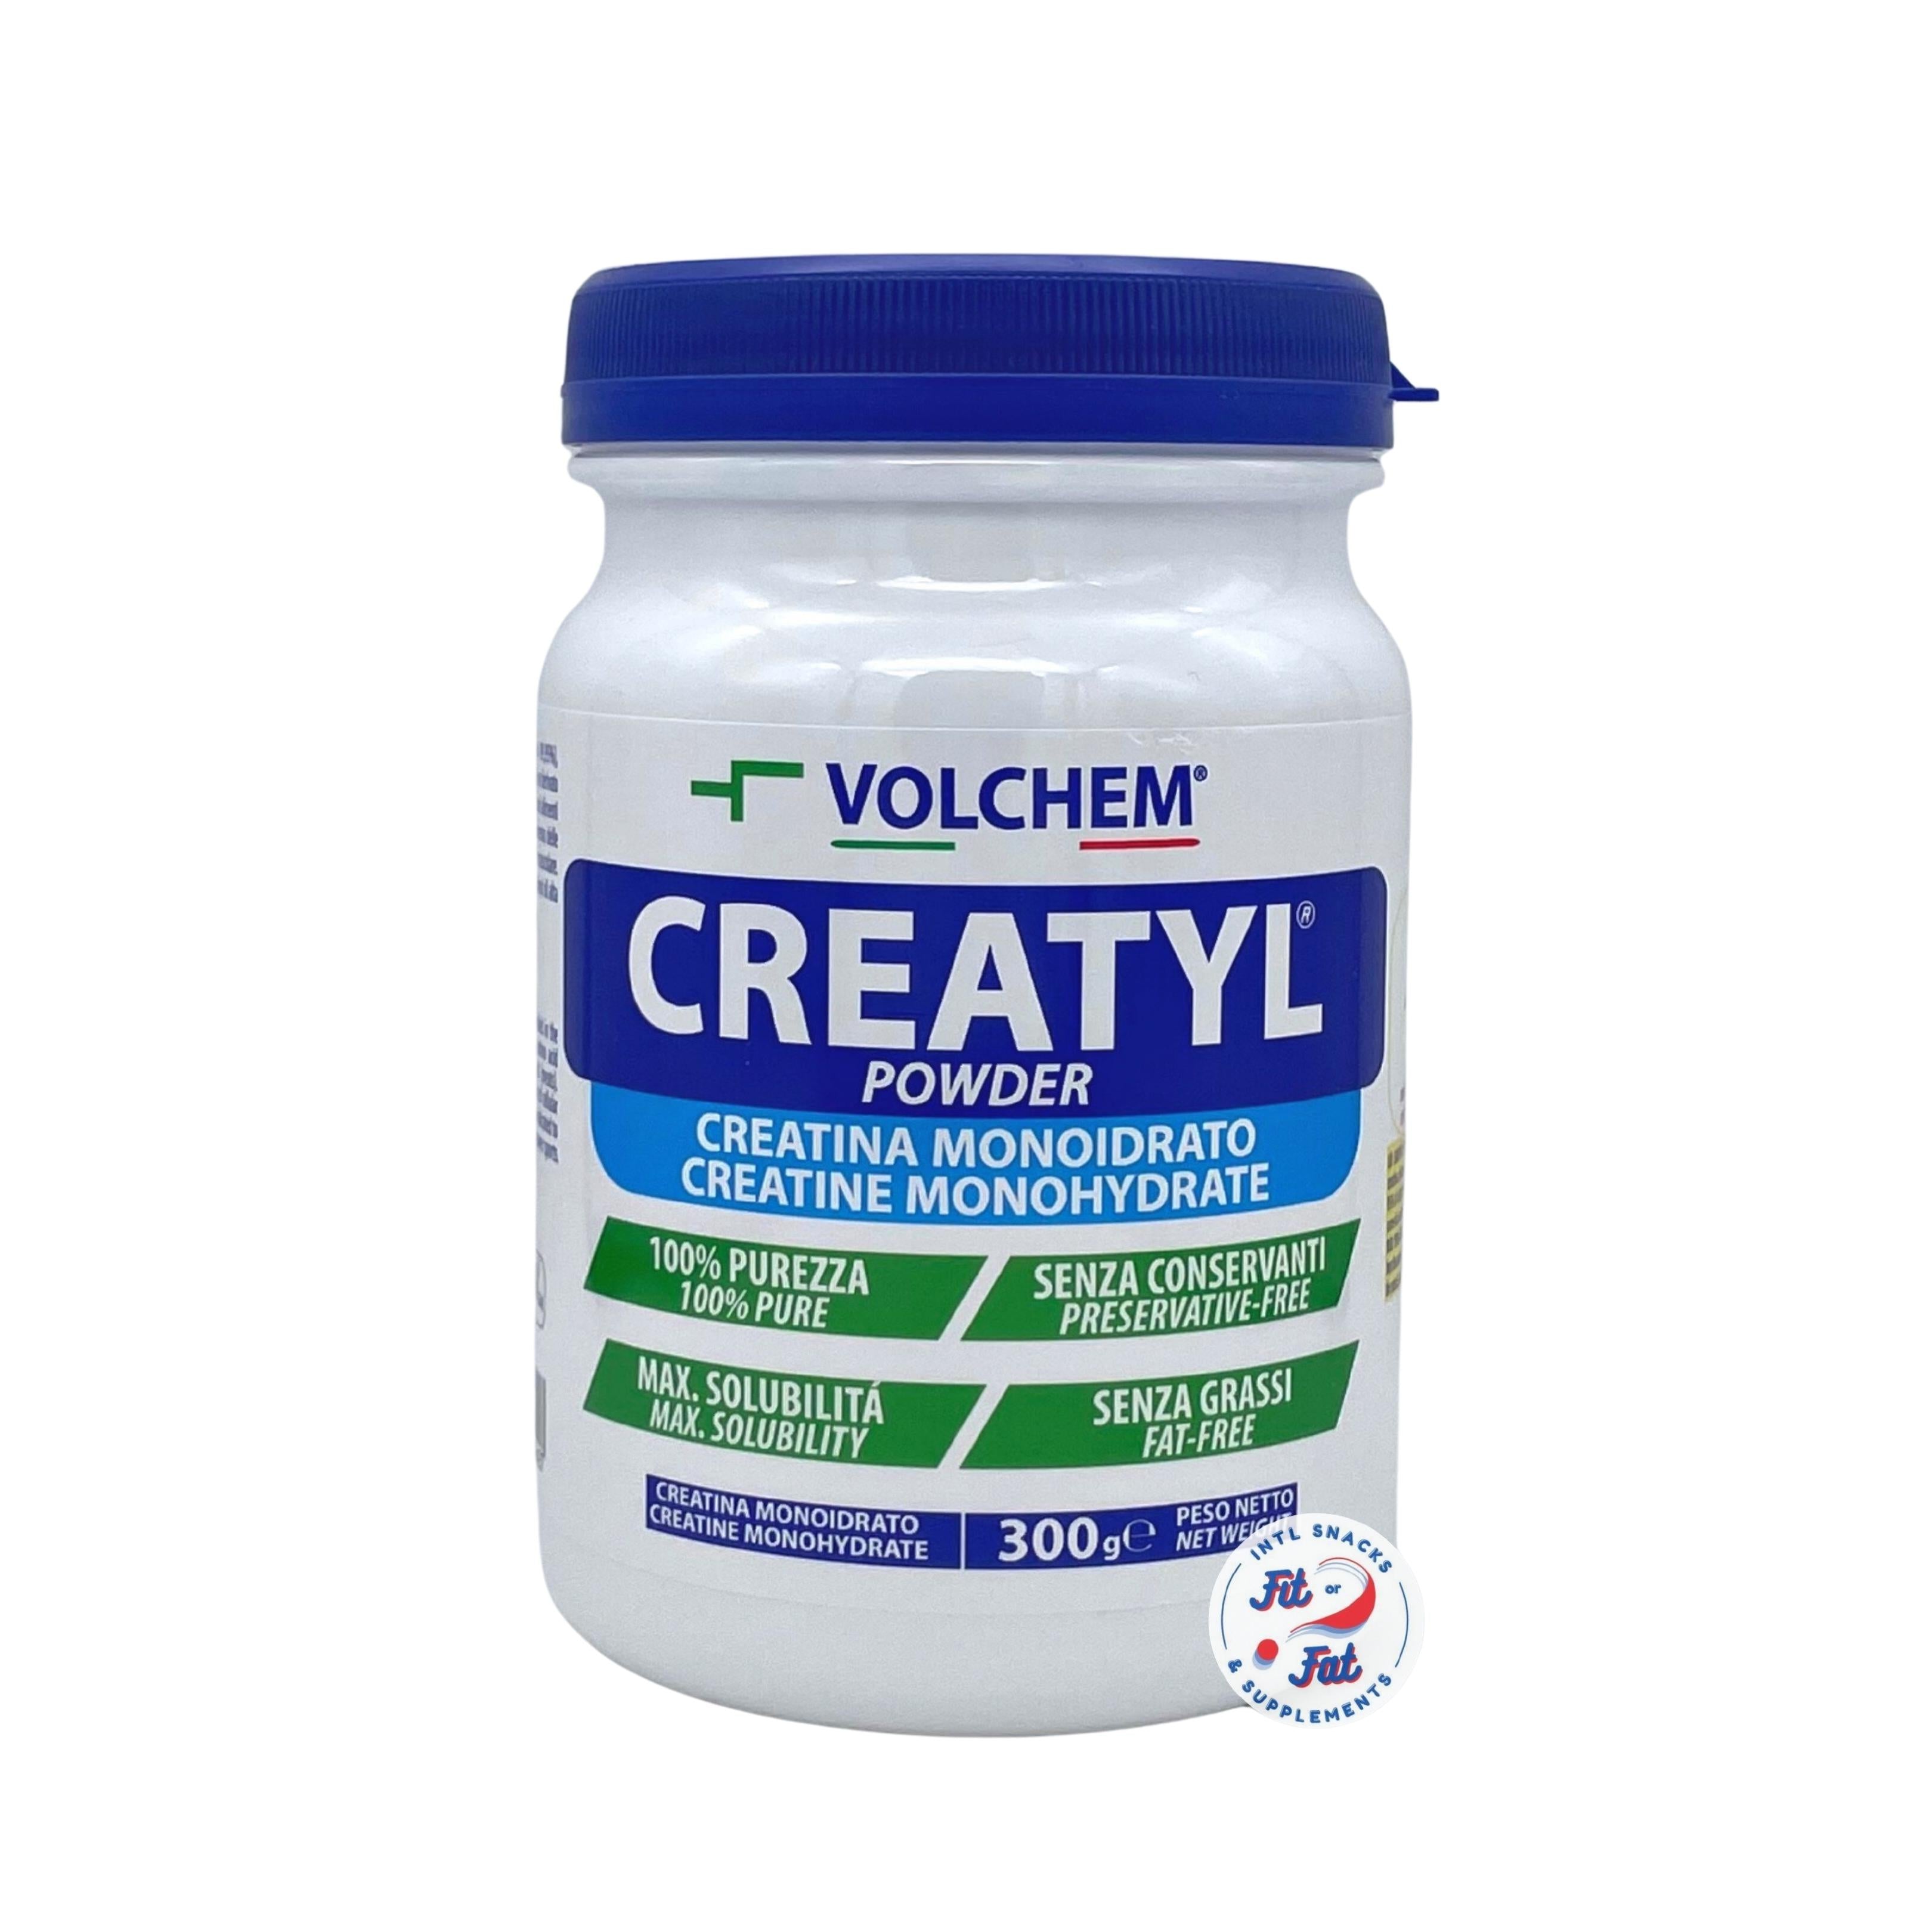 Volchem - Creatyl Powder ( creatina pura)- 300g polvere